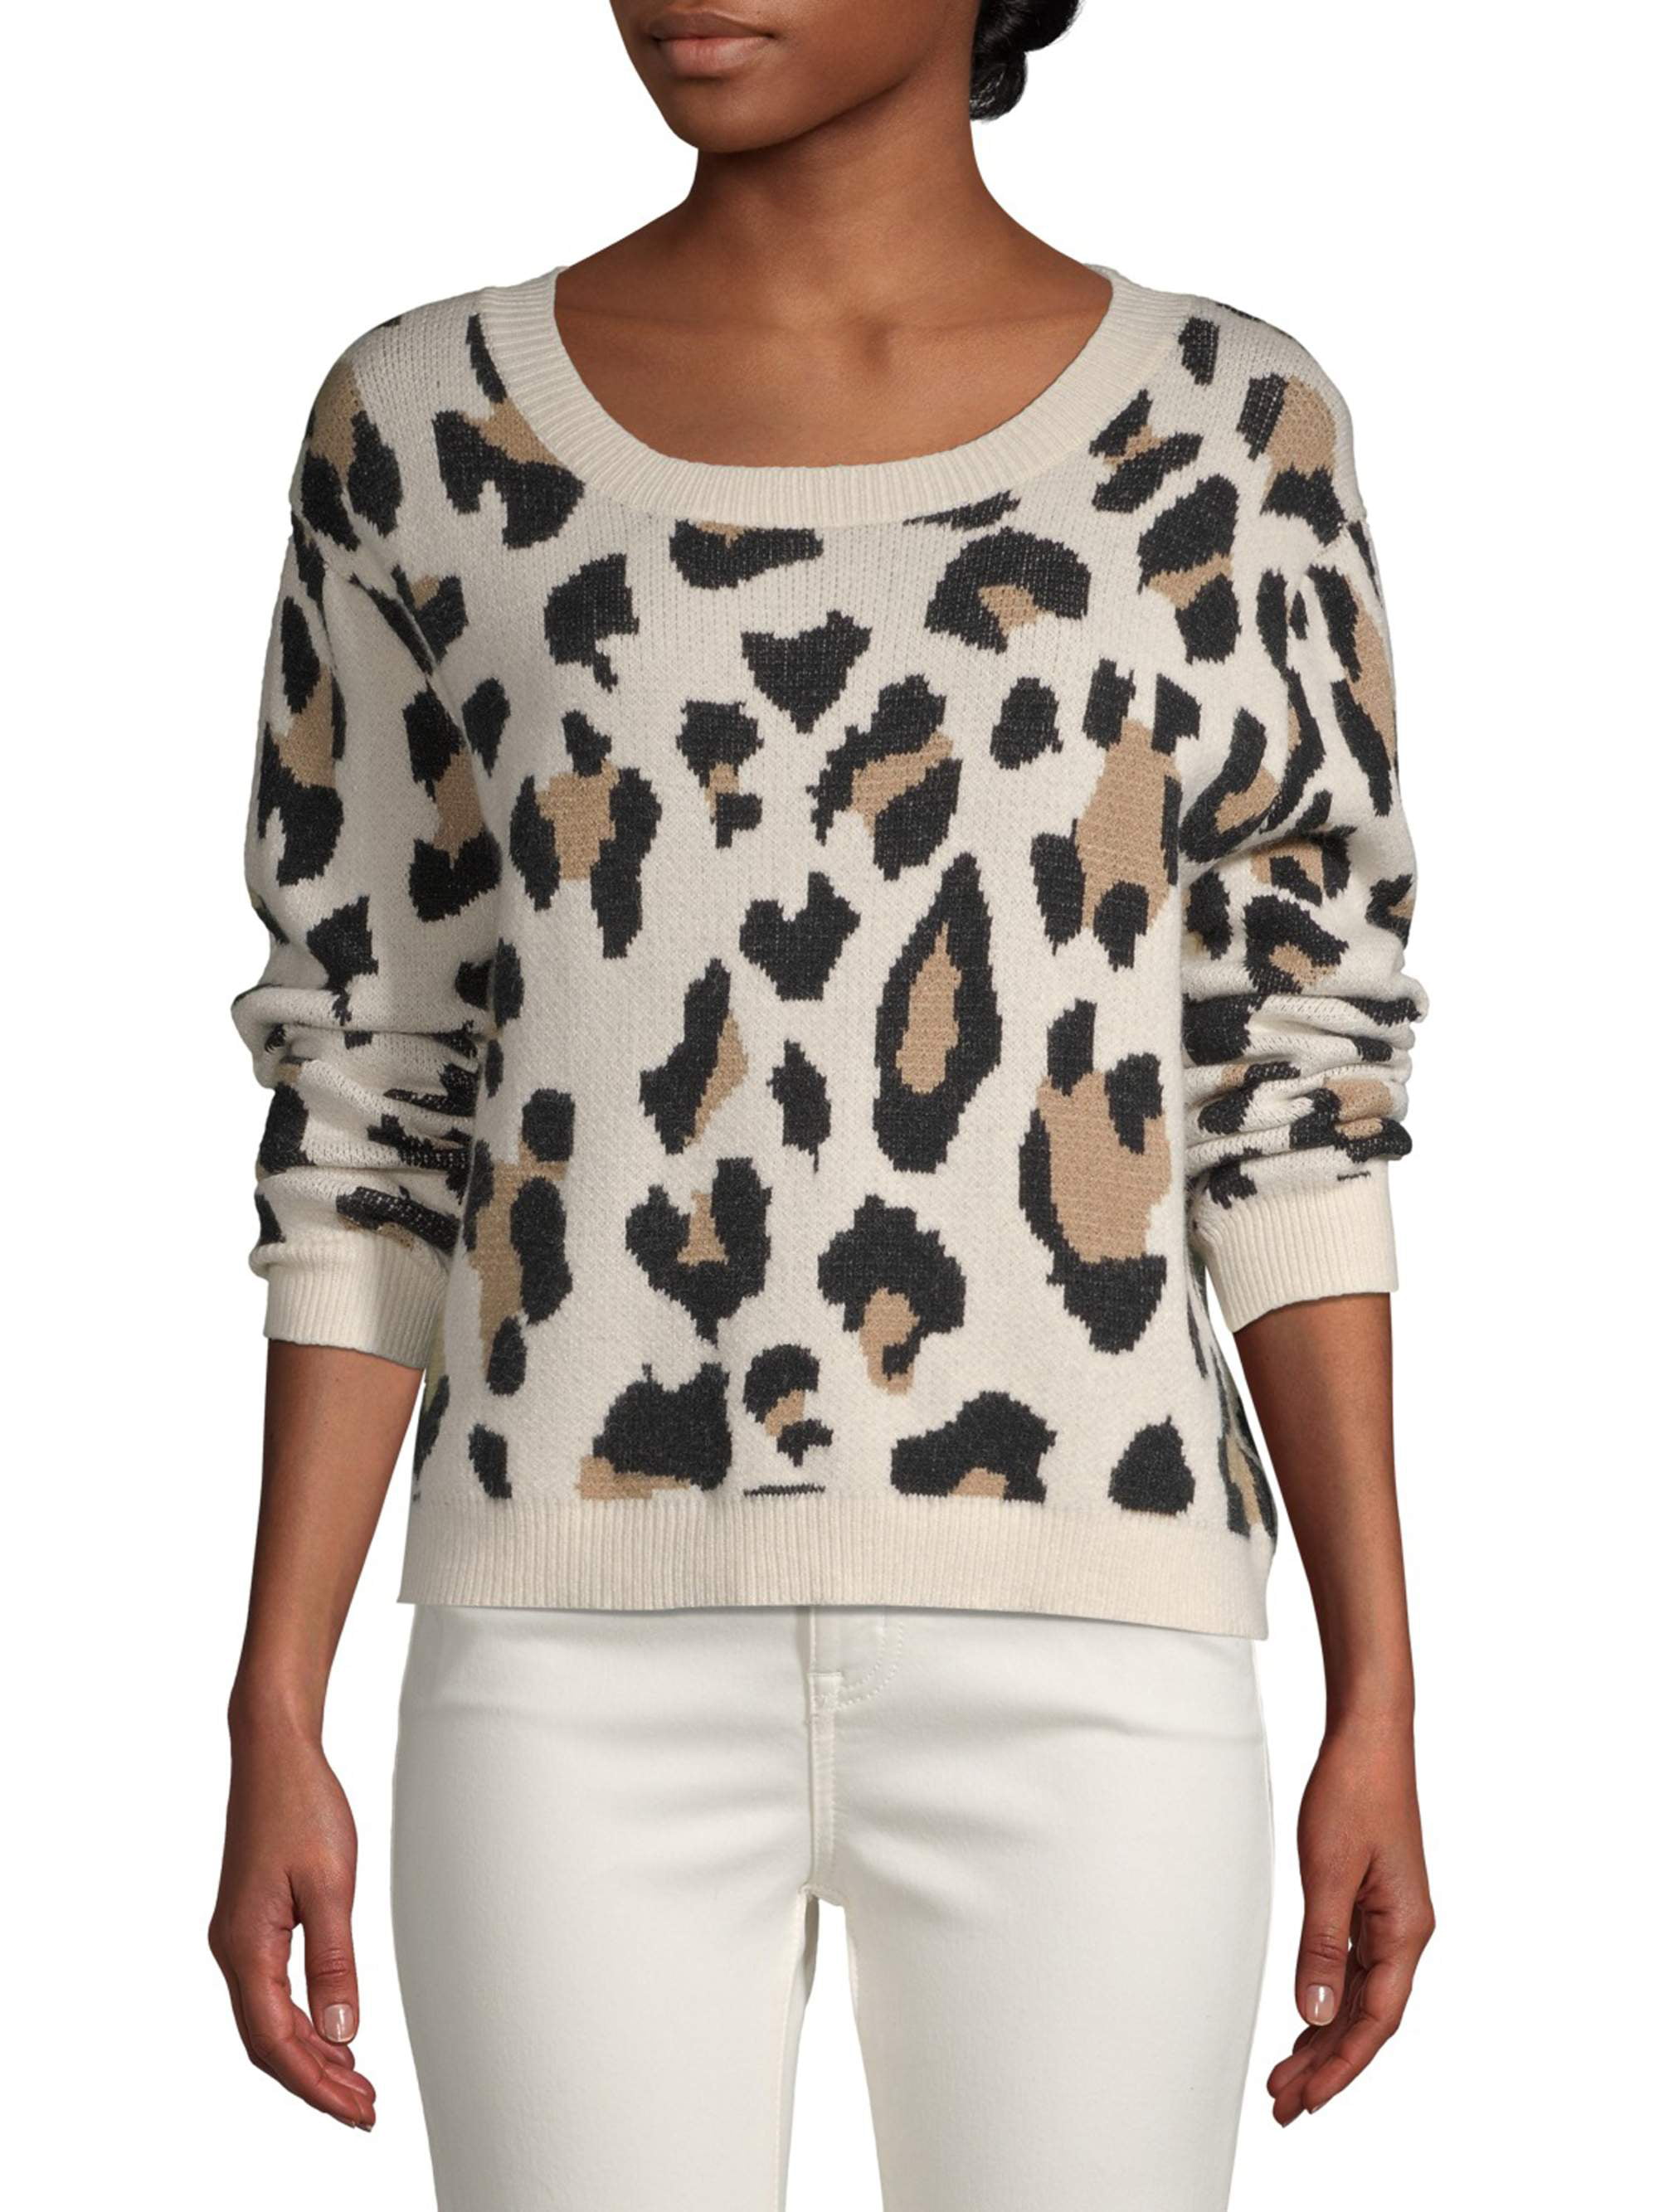 Tiger NEW Cat Sweater3D Jumper PRINTED 'LEOPARD' SWEATSHIRT Pullover 